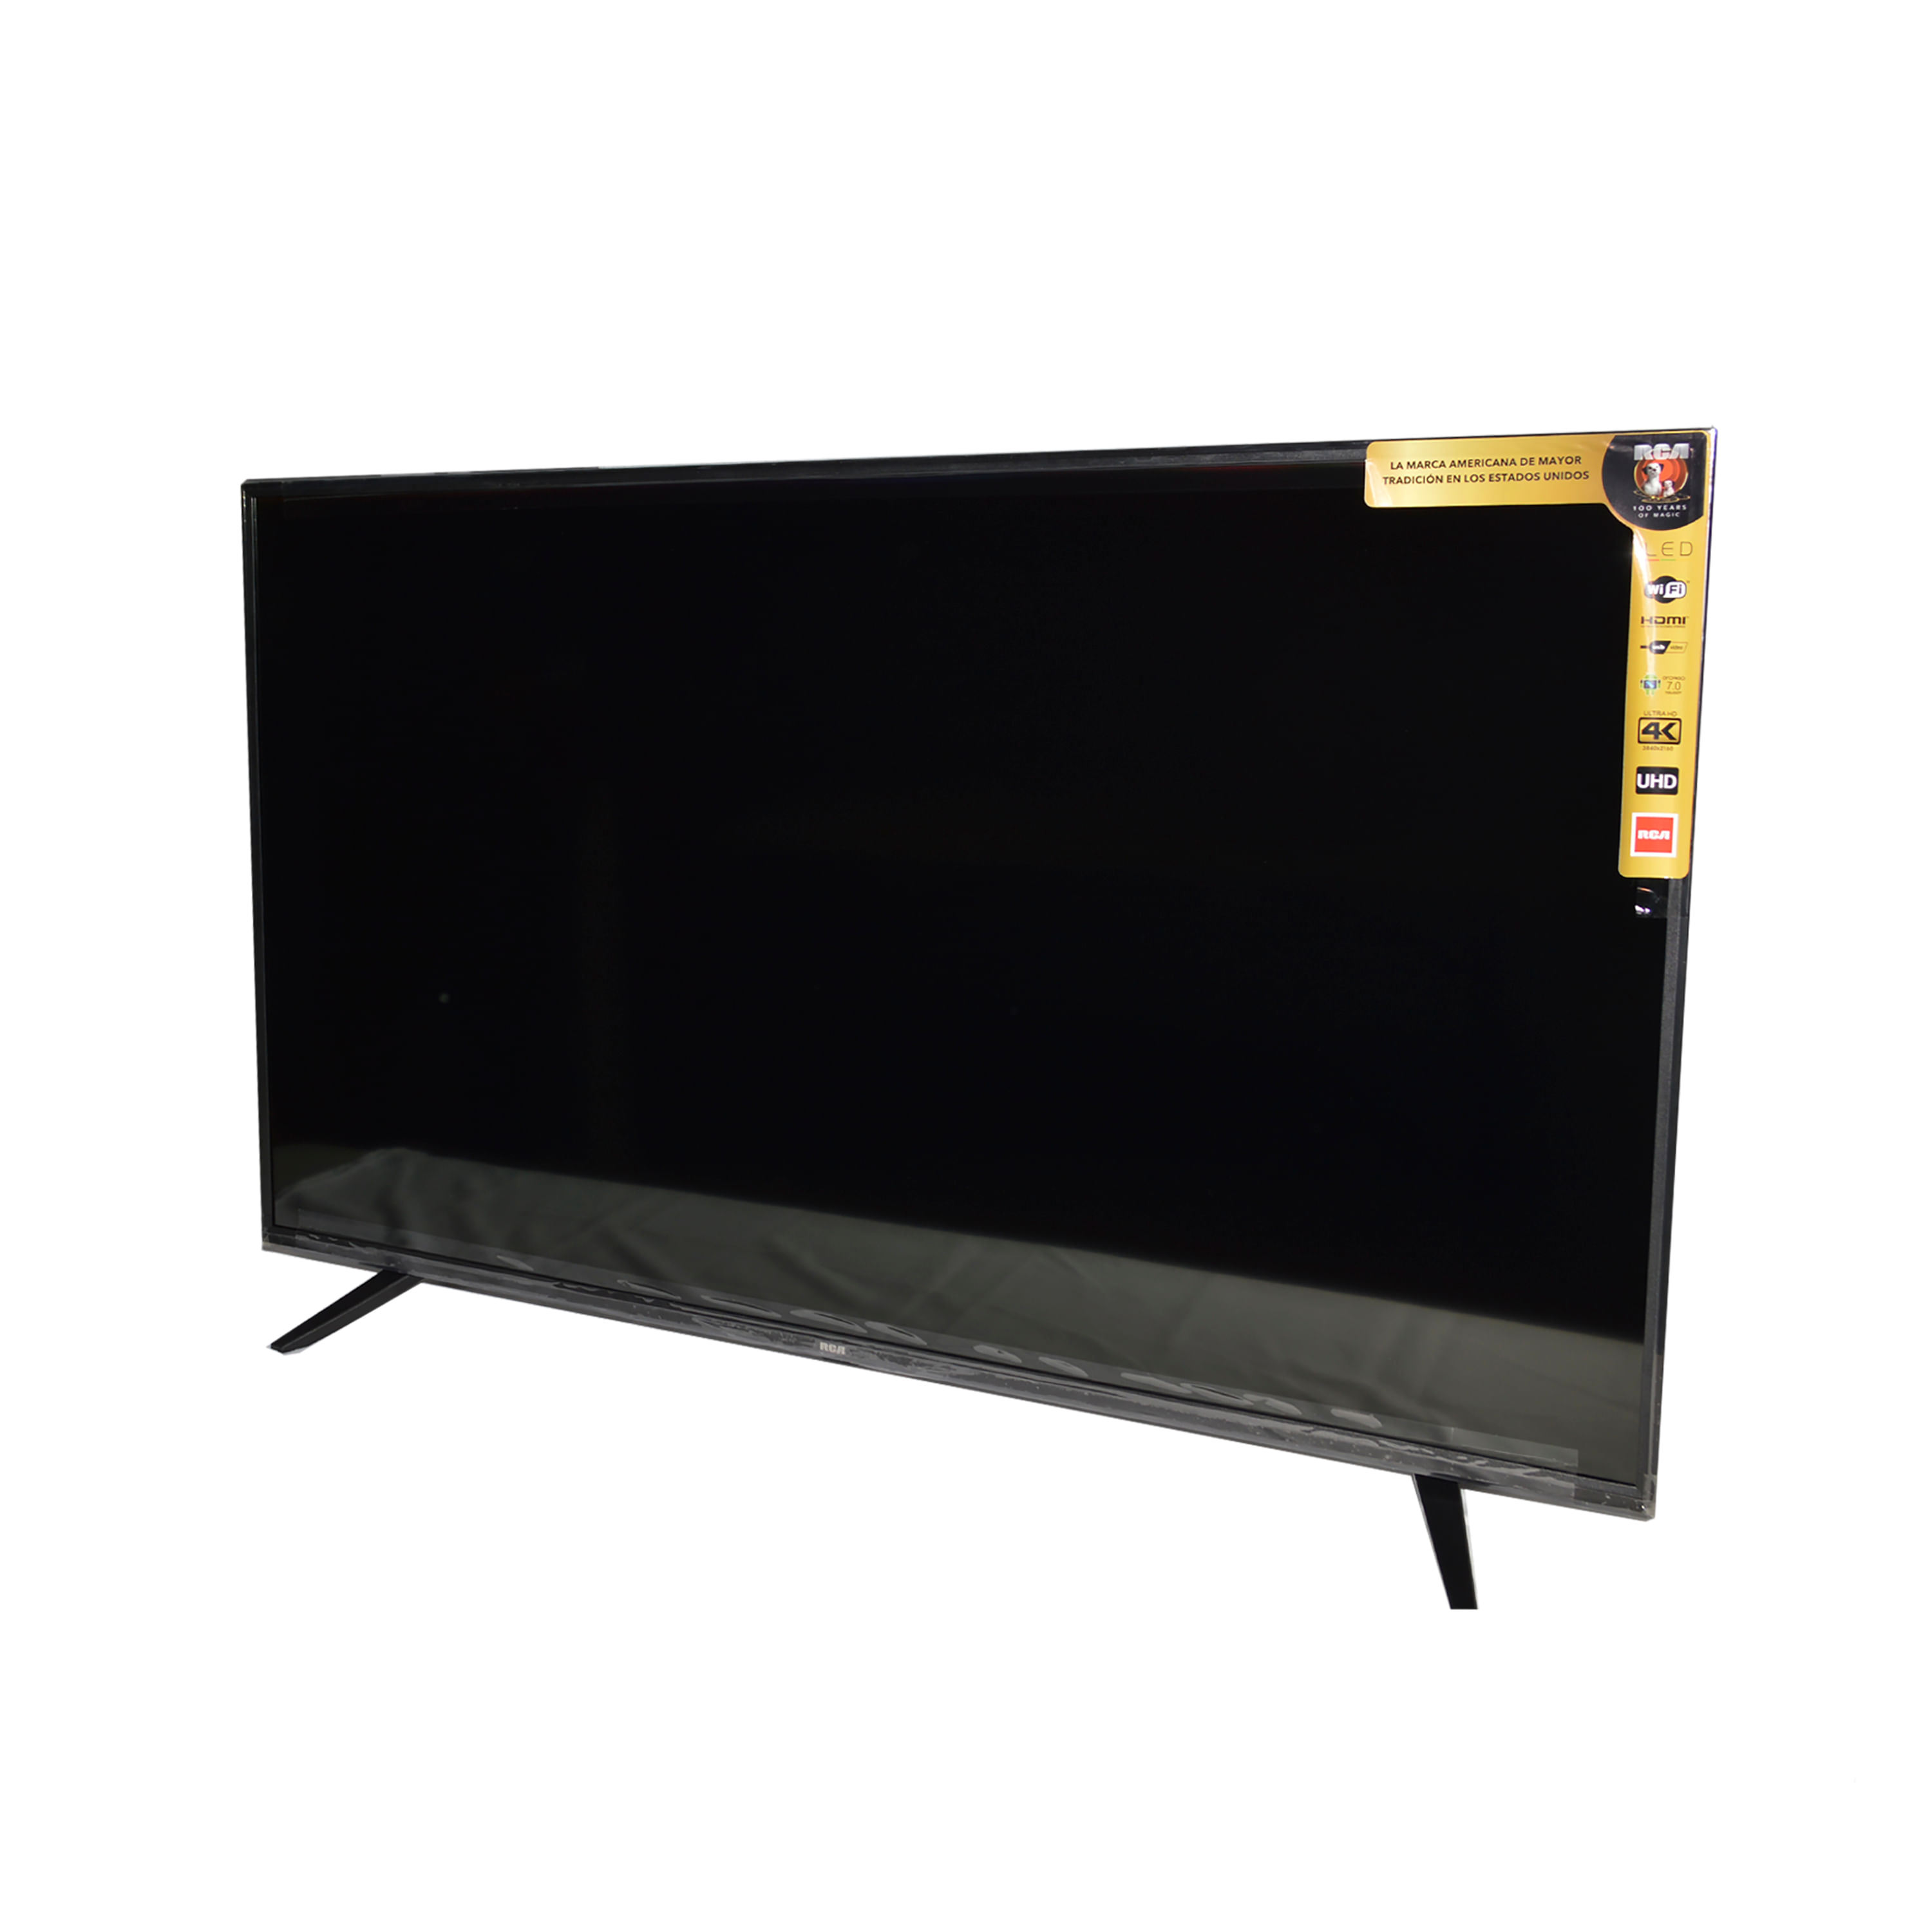 Comprar Pantalla Led 4k Smart TV RCA RC50RK 50 Pulgadas, Walmart Costa  Rica - Maxi Palí